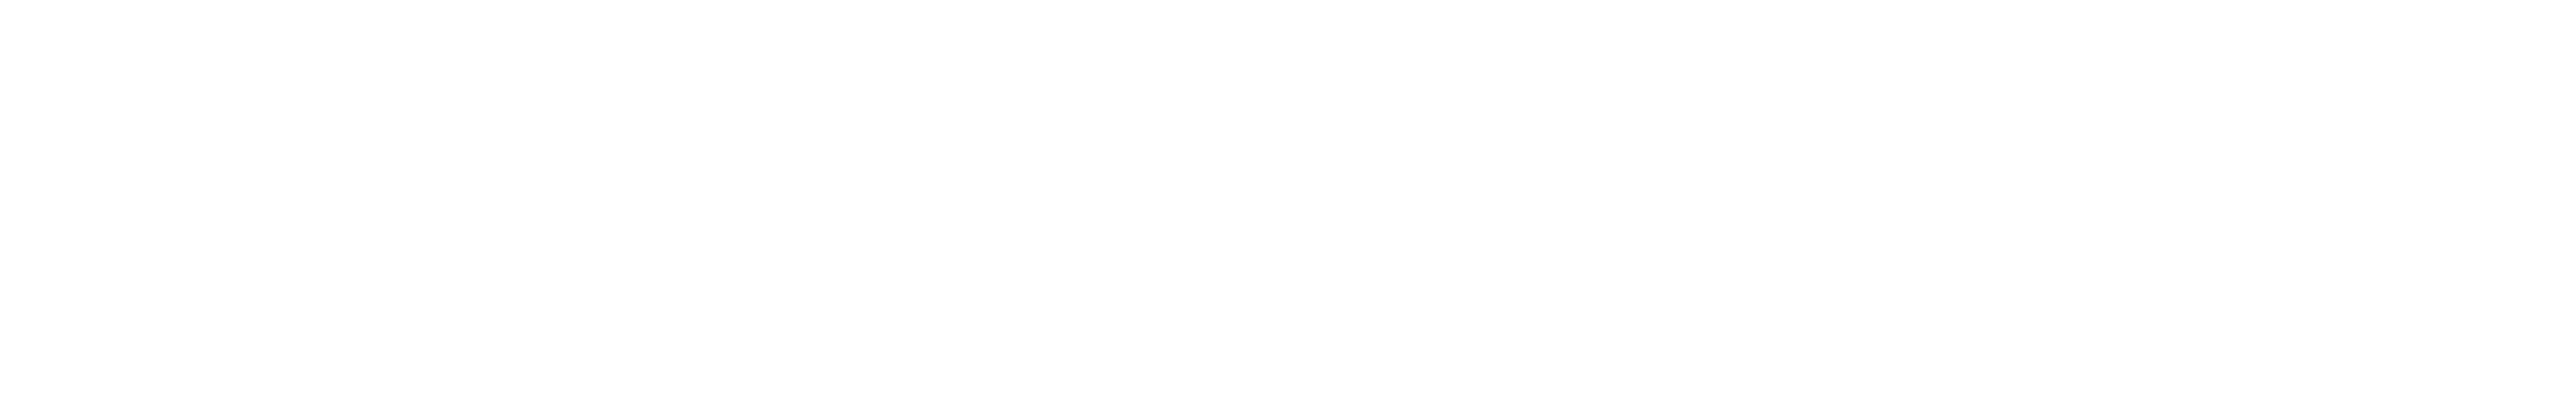 ICStudios_Logo_Sept2016_WHITE